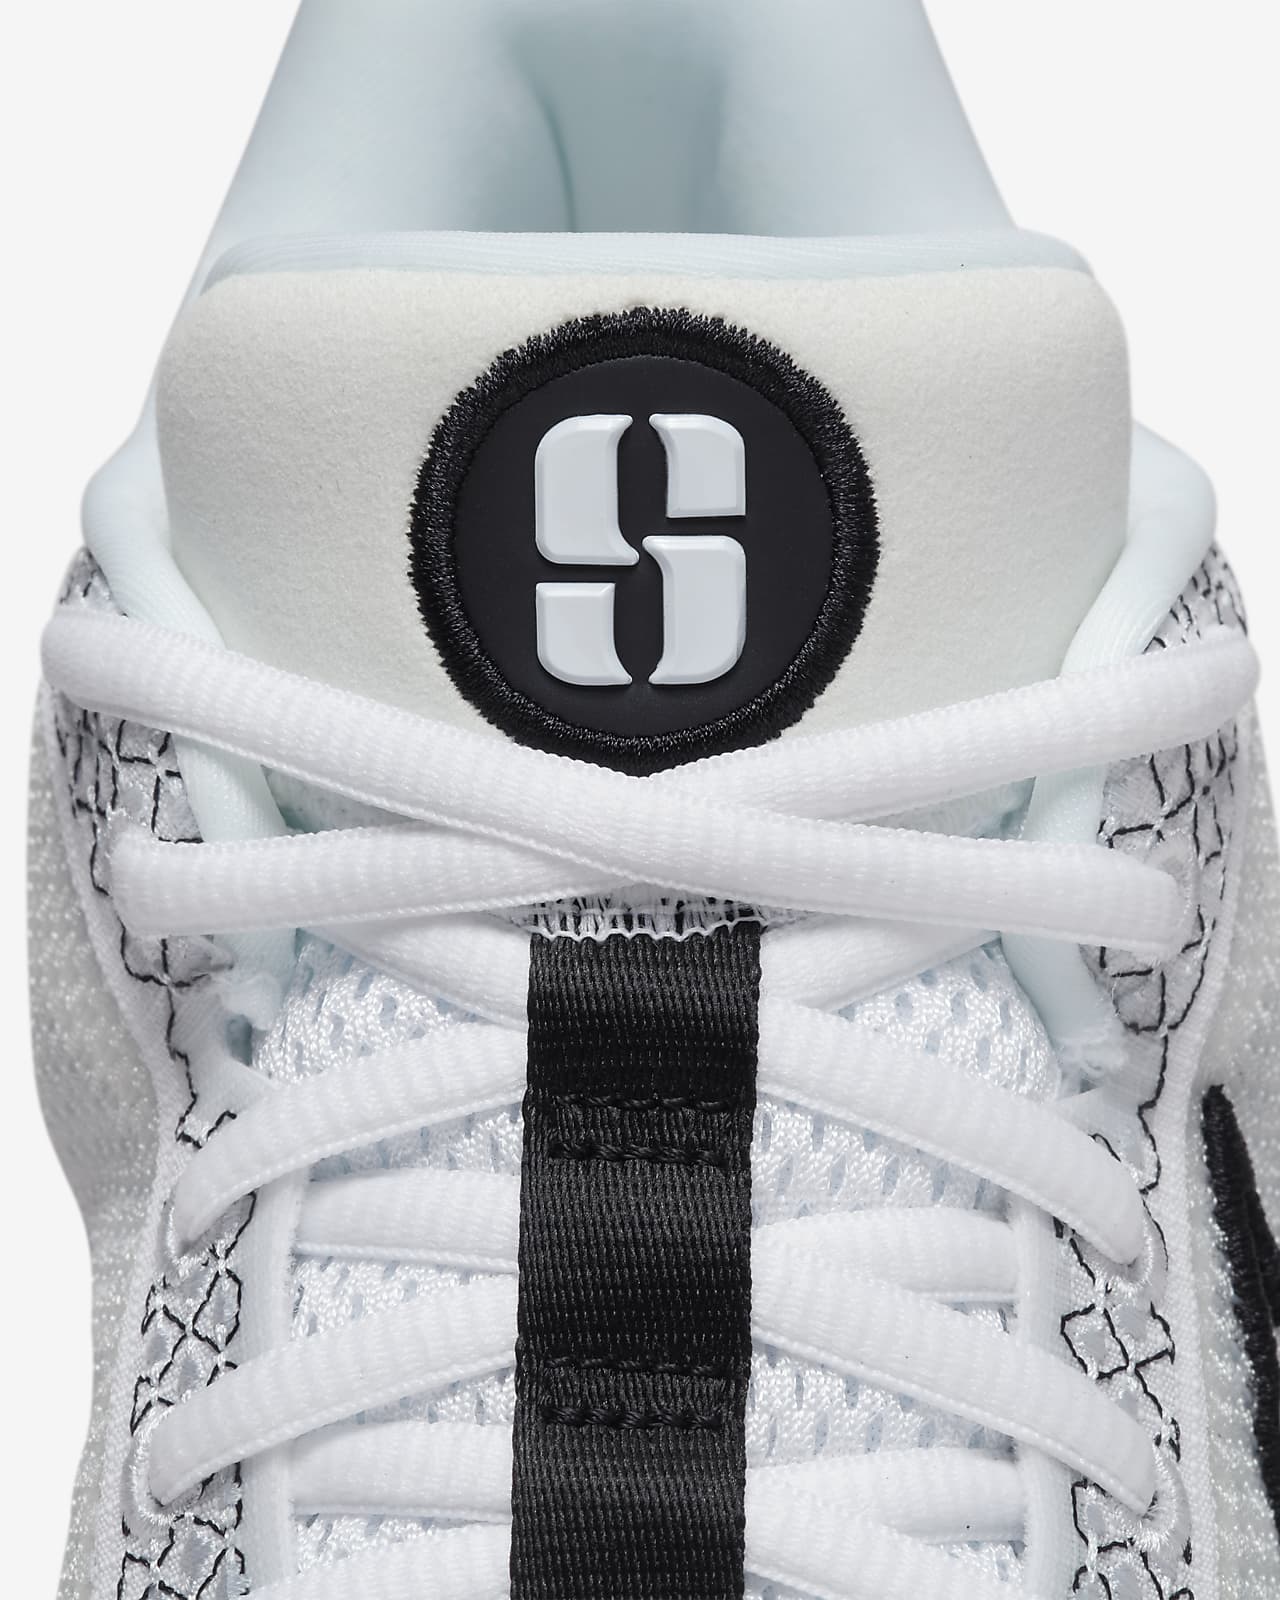 Sabrina 1 'Magnetic' Basketball Shoes